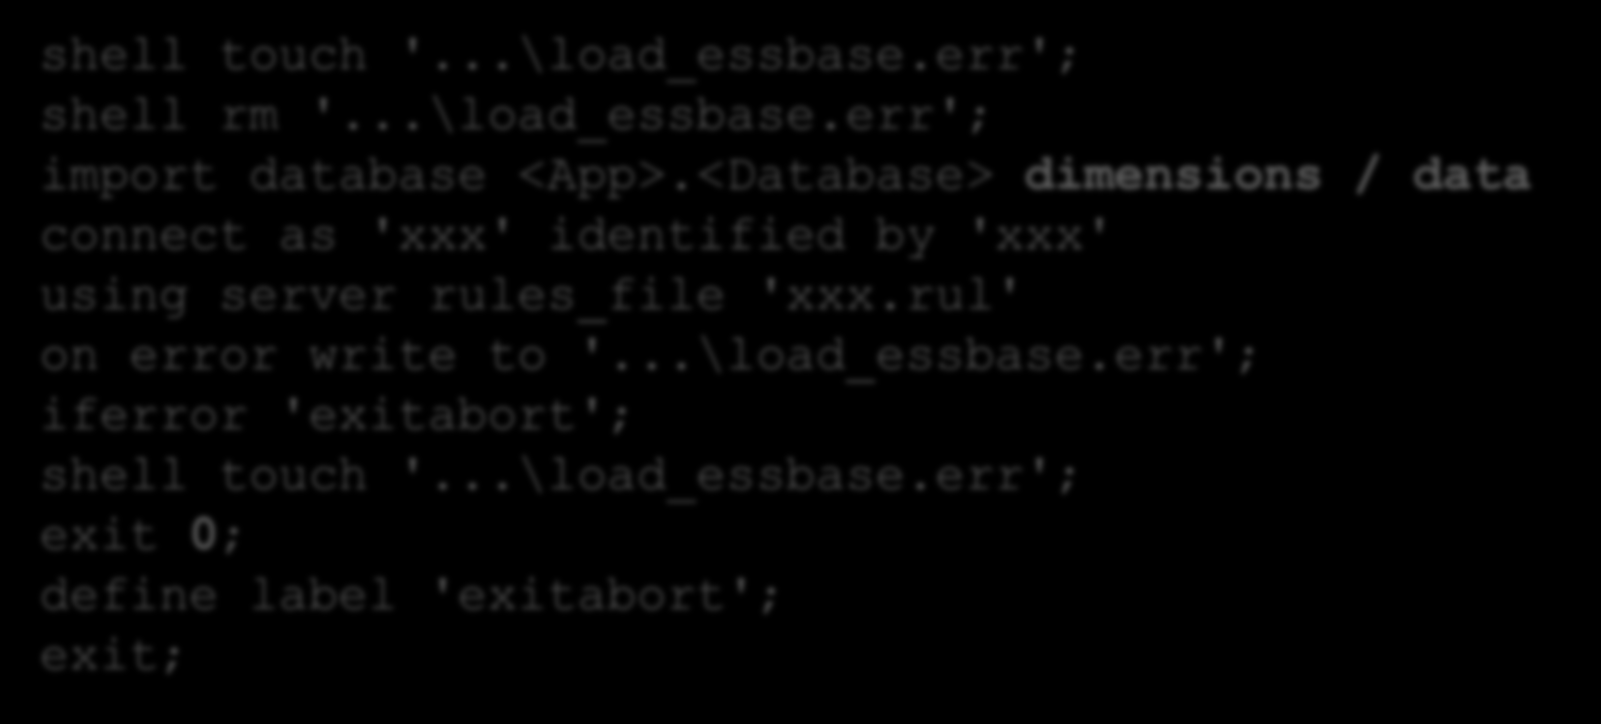 Verwendung shell touch '...\load_essbase.err'; shell rm '...\load_essbase.err'; import database <App>.